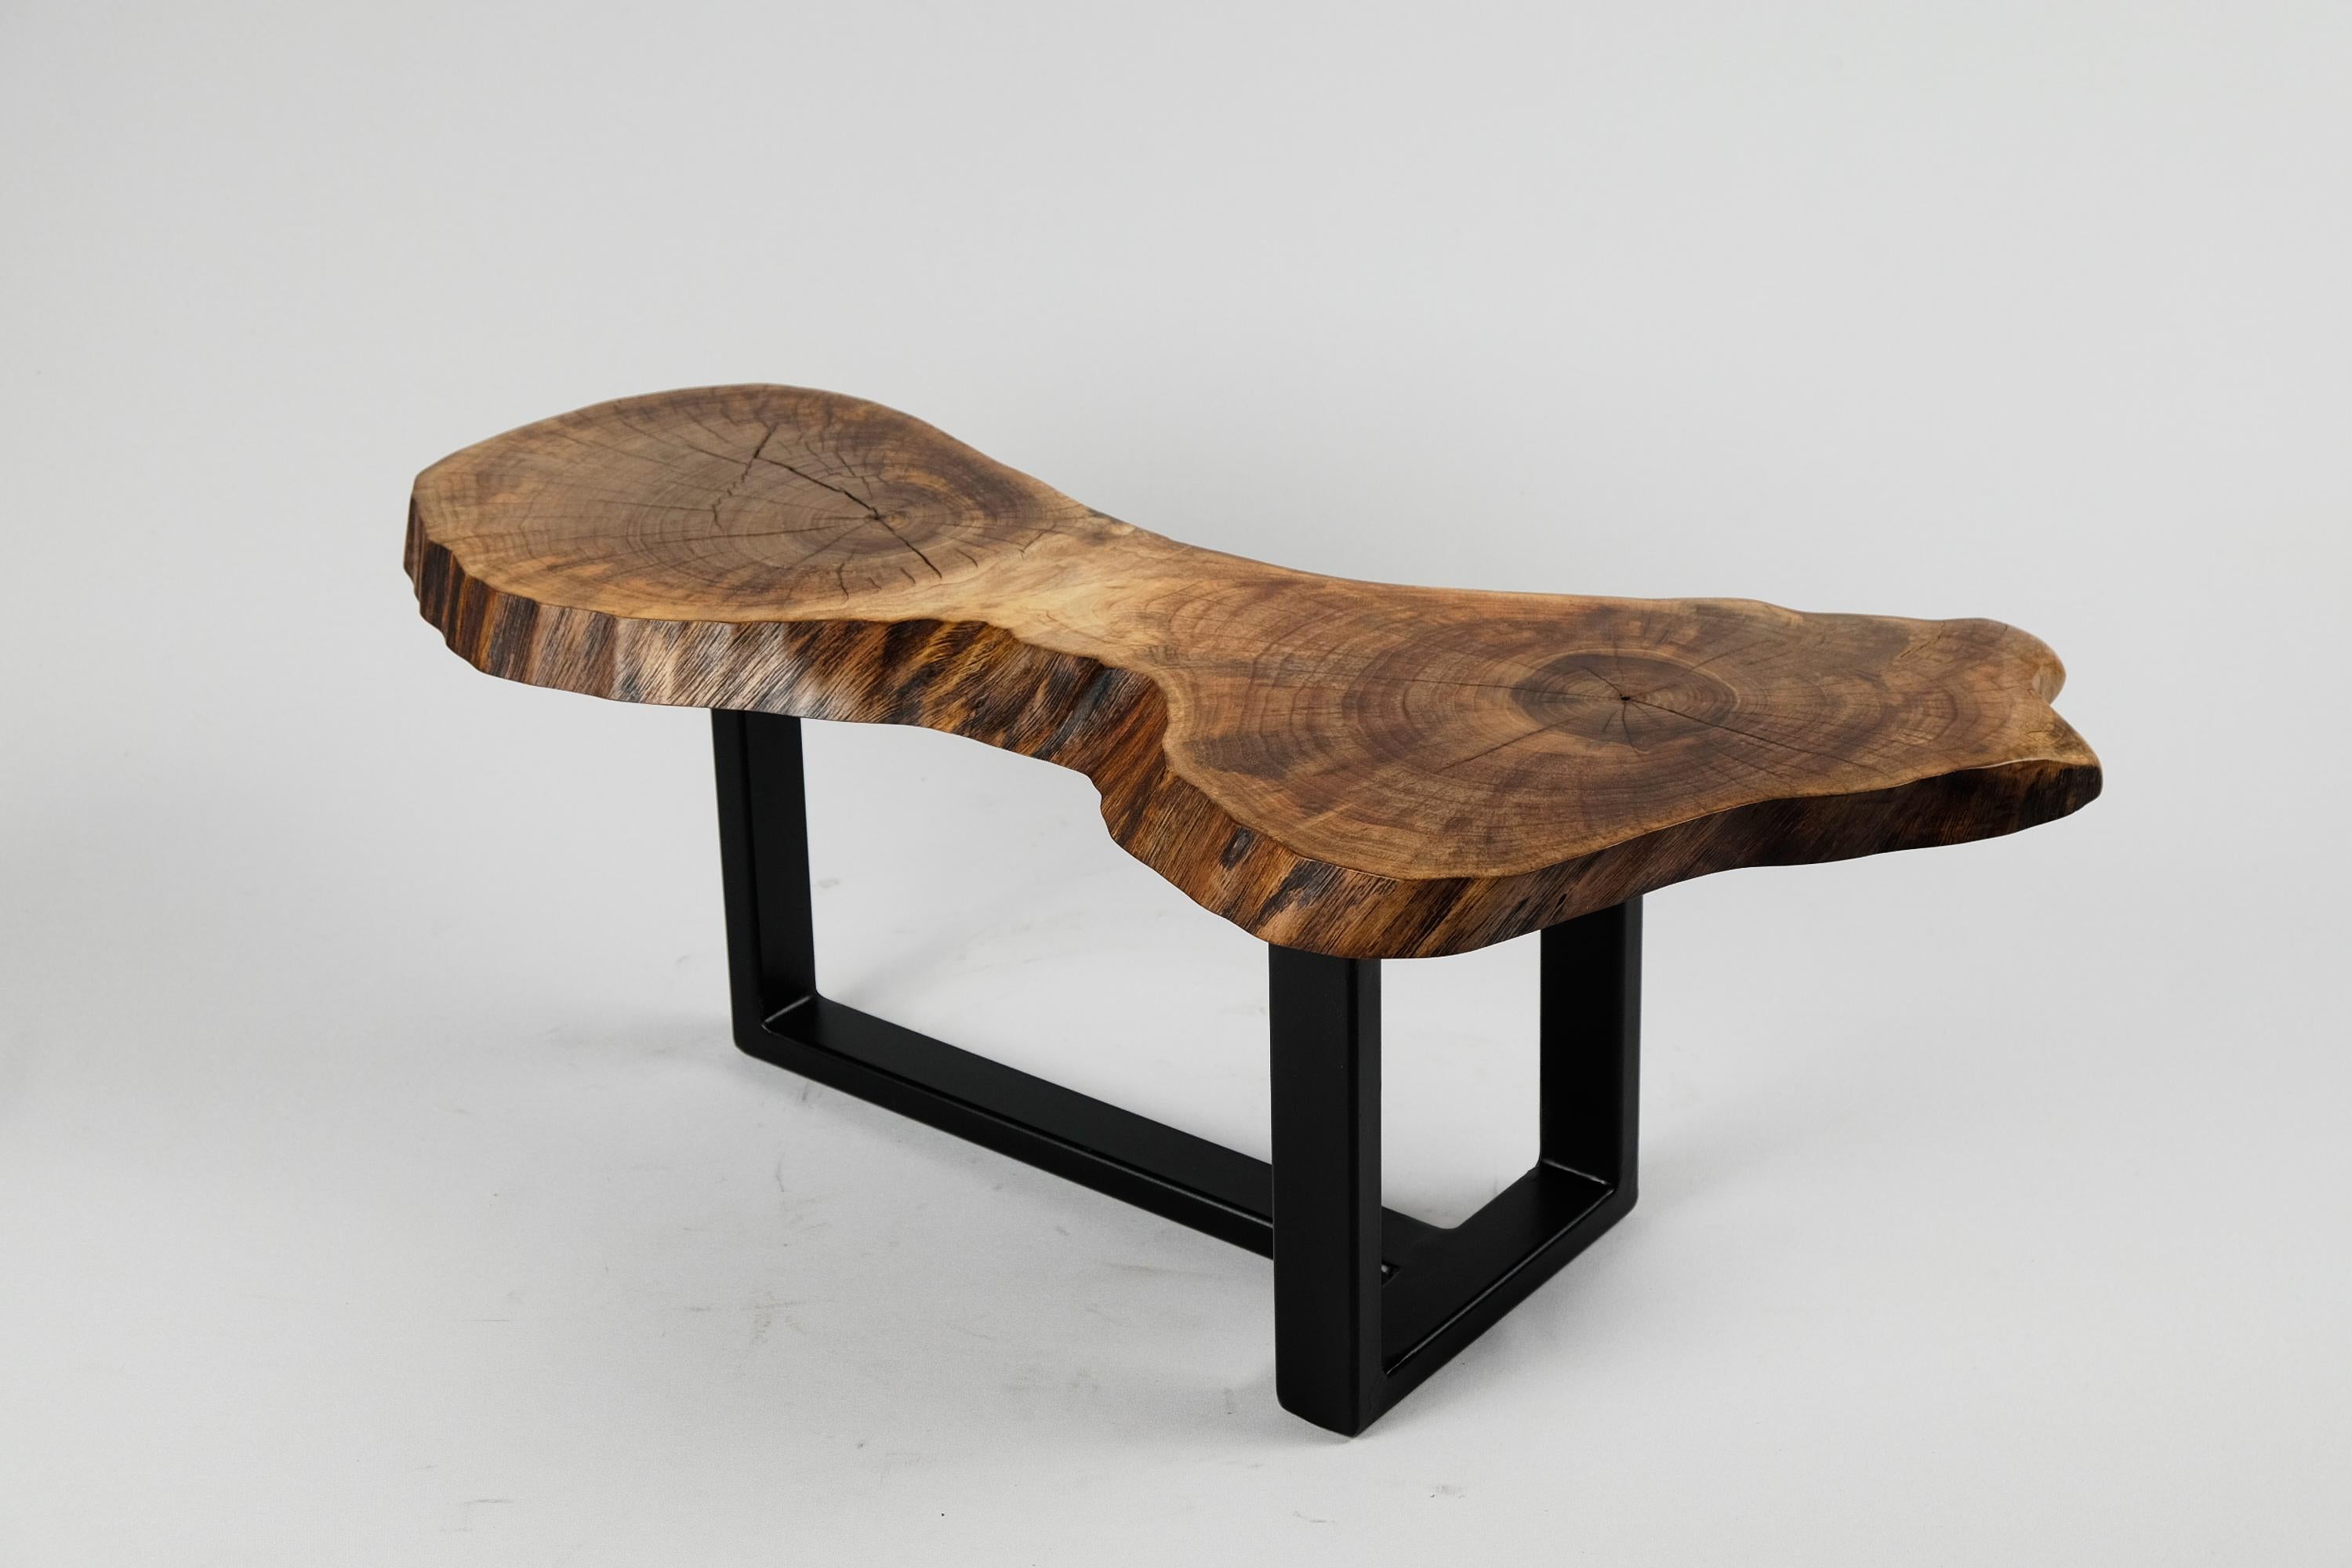 Croatian Original Contemporary Design, Burnt Oak with Steel, Unique Side Table, Logniture